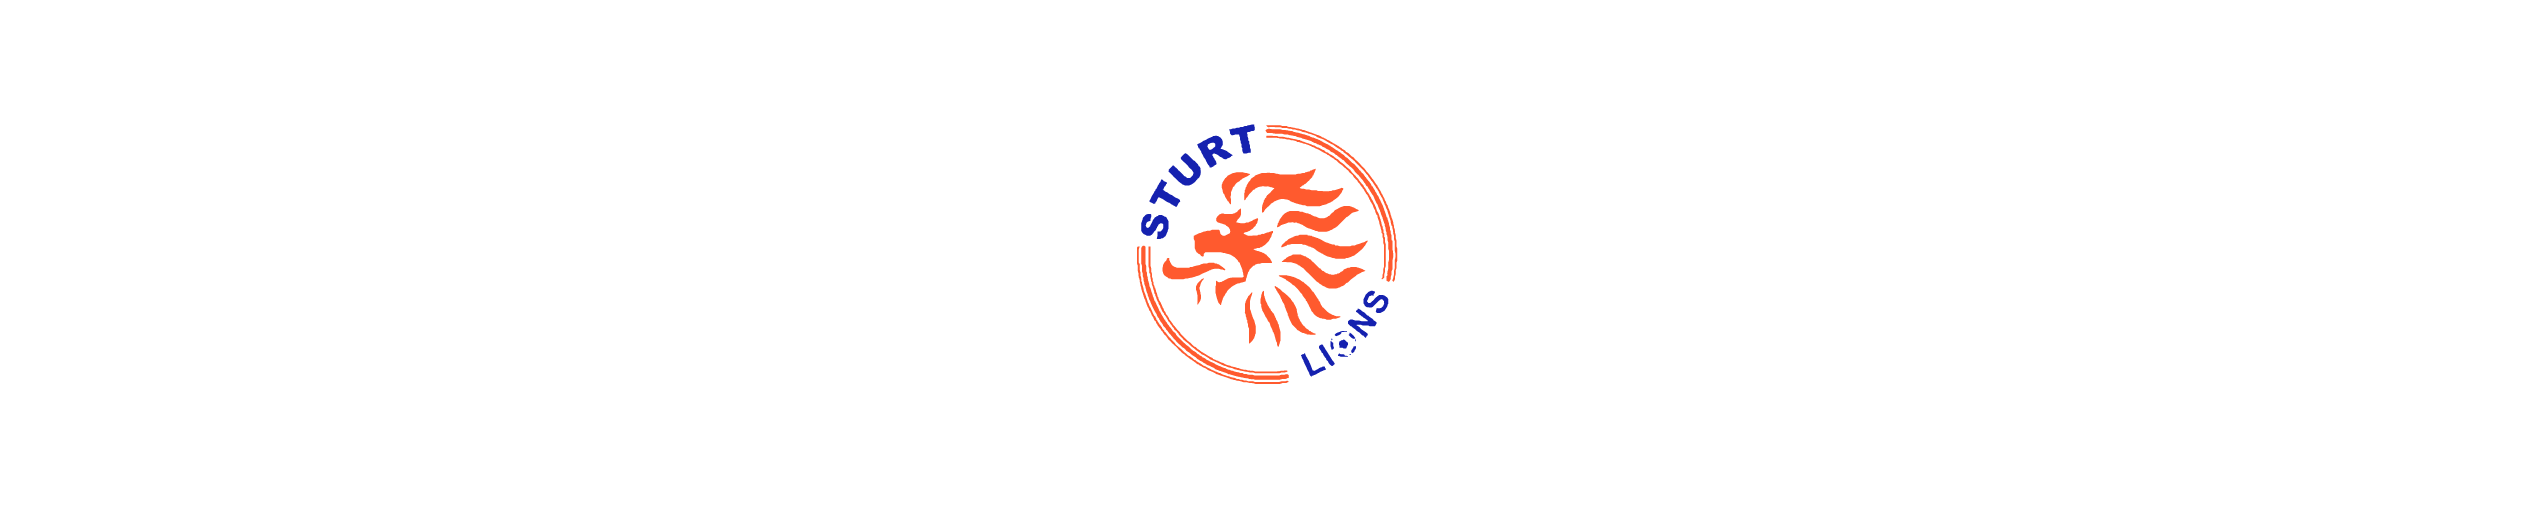 Sturt Lions CSL